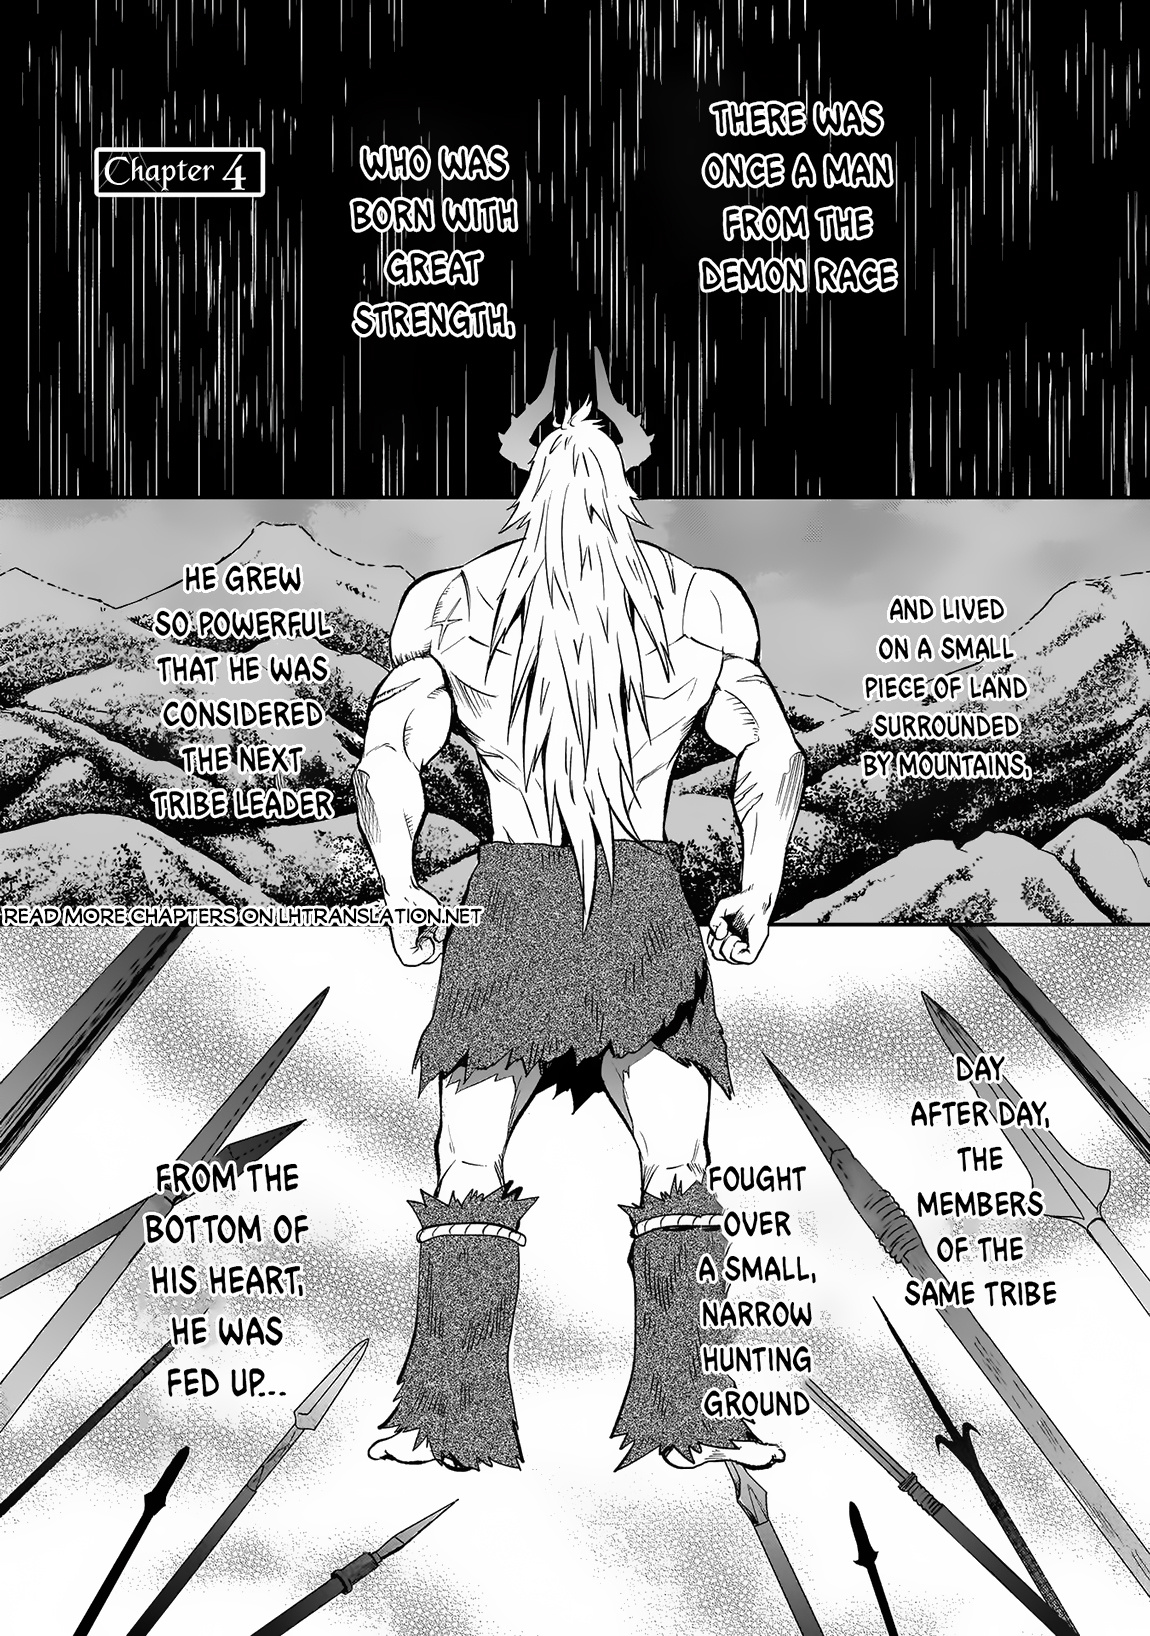 Seventh Demon Prince Jilbagias' Chronicle Of Overthrowing The Demon Kingdom - Page 2